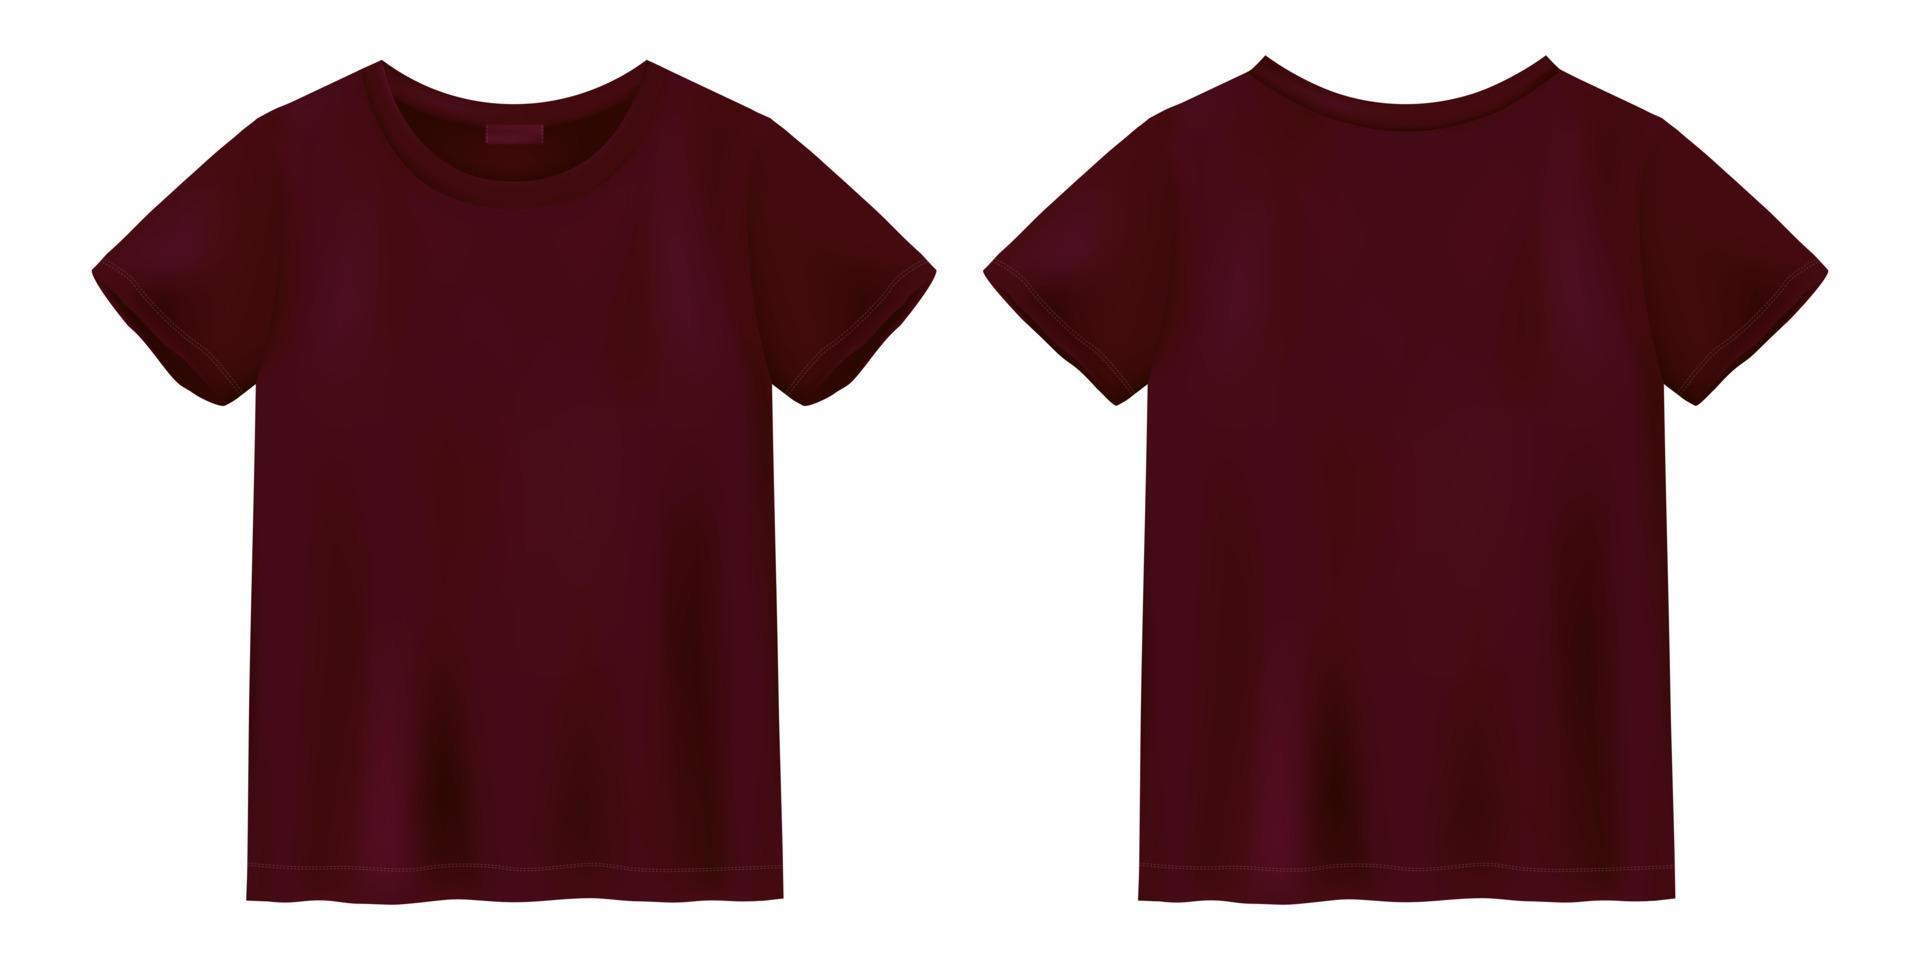 Unisex burgundy color t shirt mock up. T-shirt design template. vector